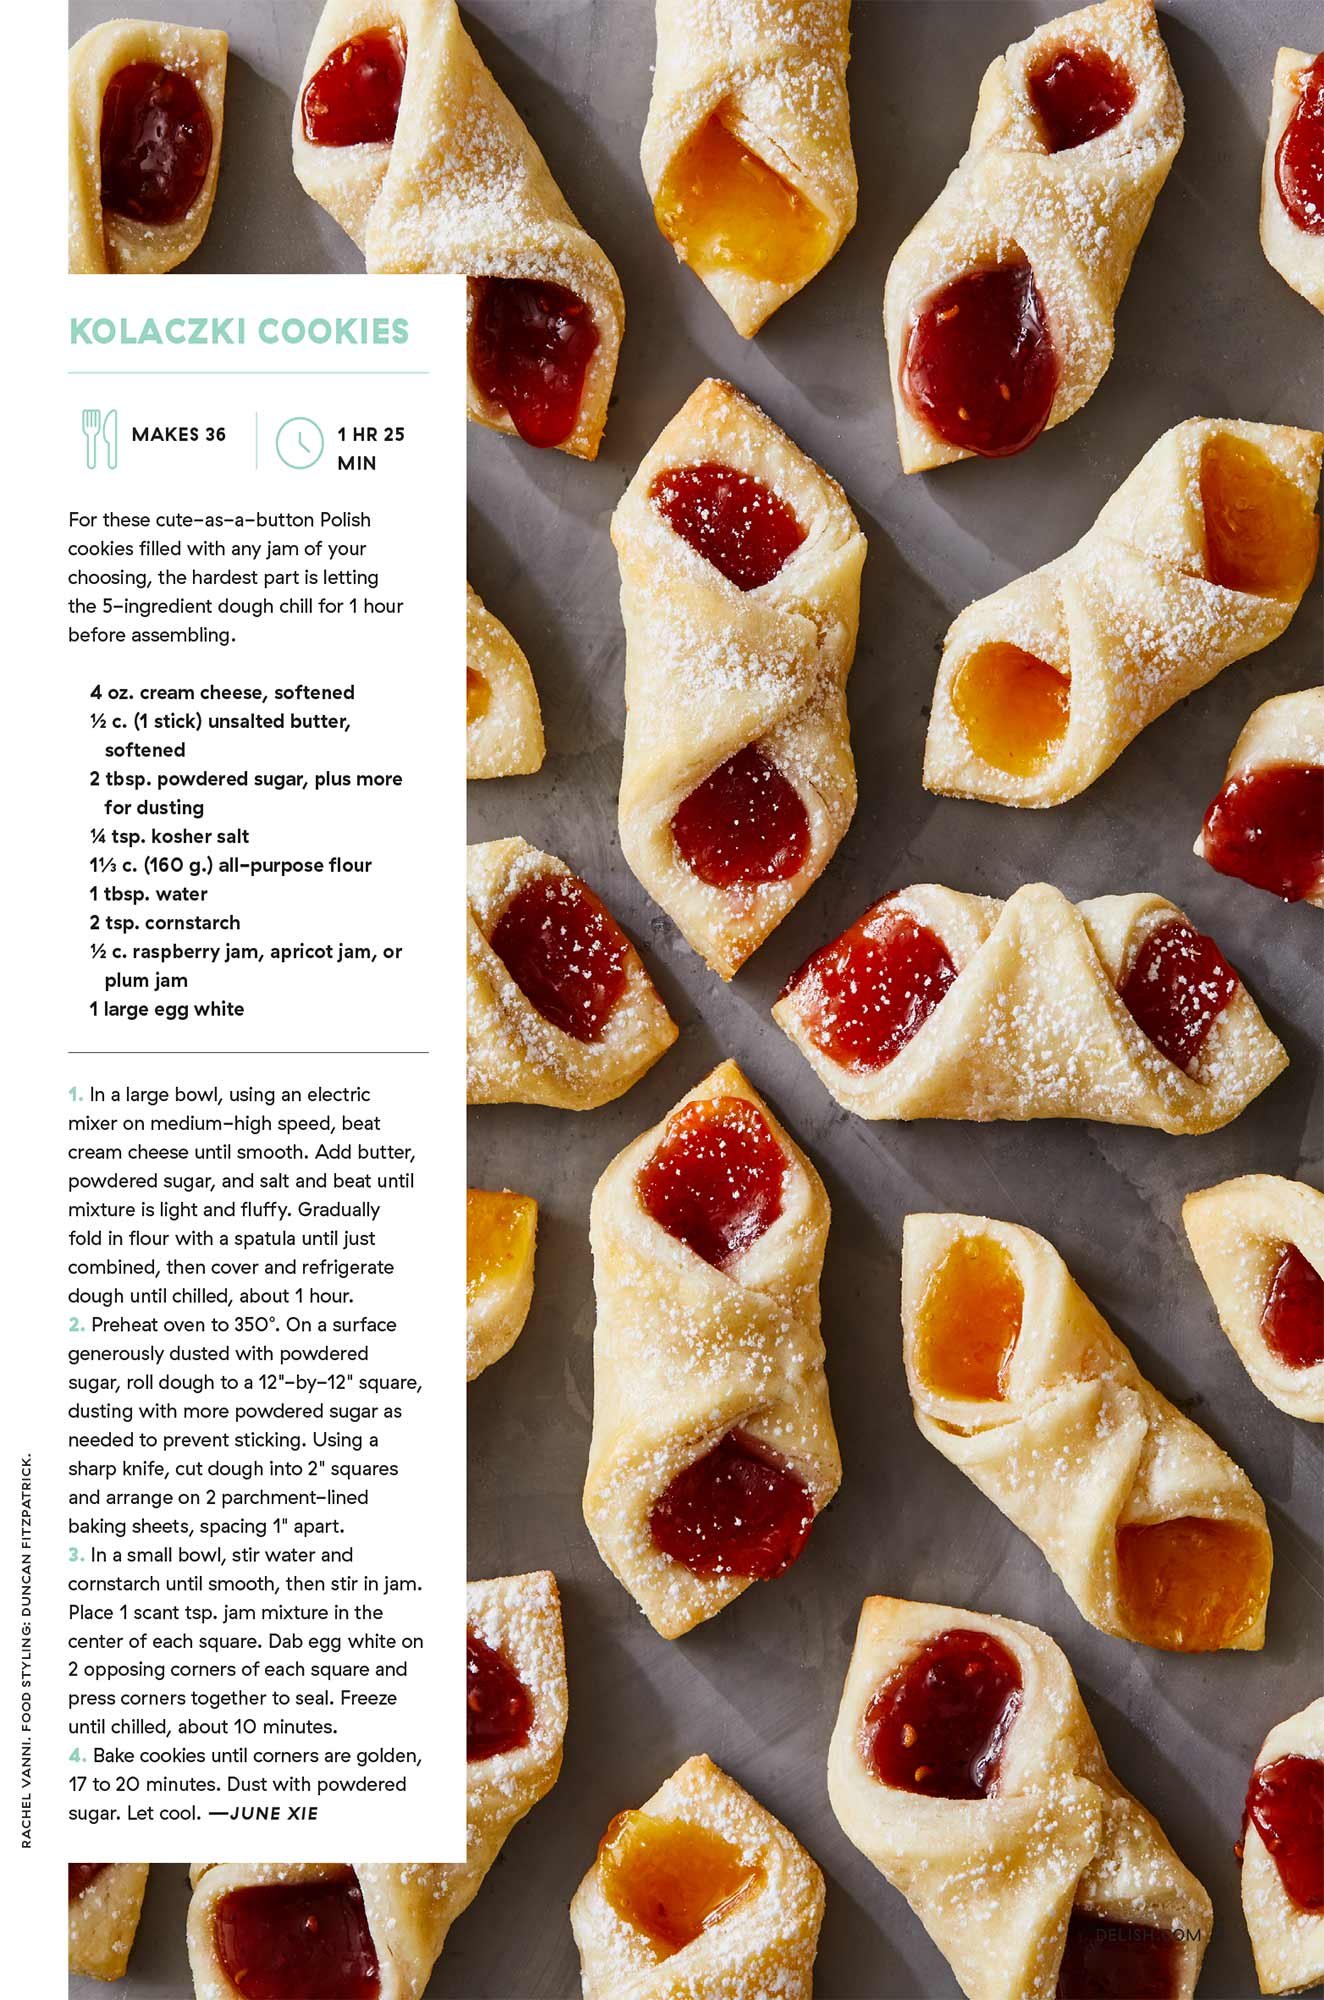 nyc-nj-food-editorial-photographer-kolaczki-cream-cheese-cookies-tearsheet.jpg